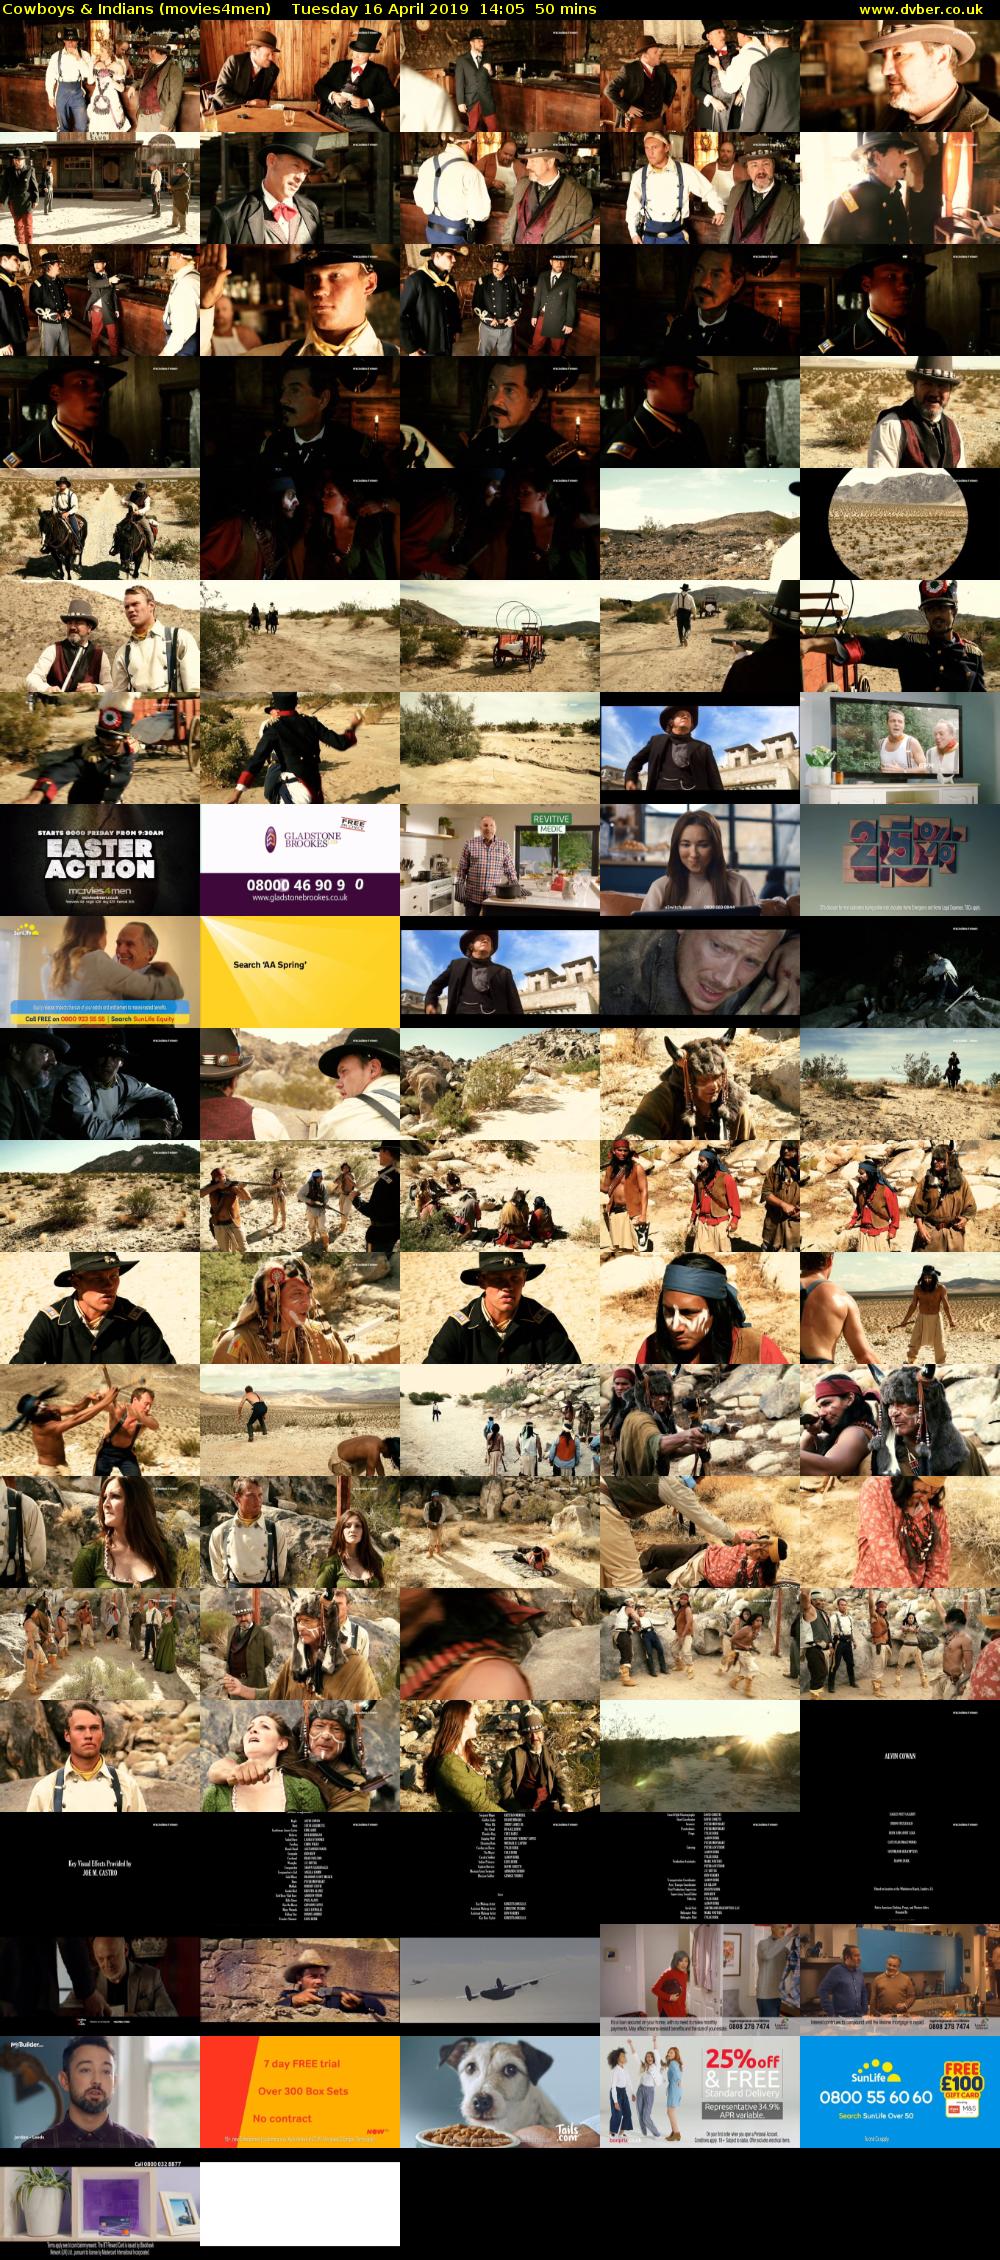 Cowboys & Indians (movies4men) Tuesday 16 April 2019 14:05 - 14:55